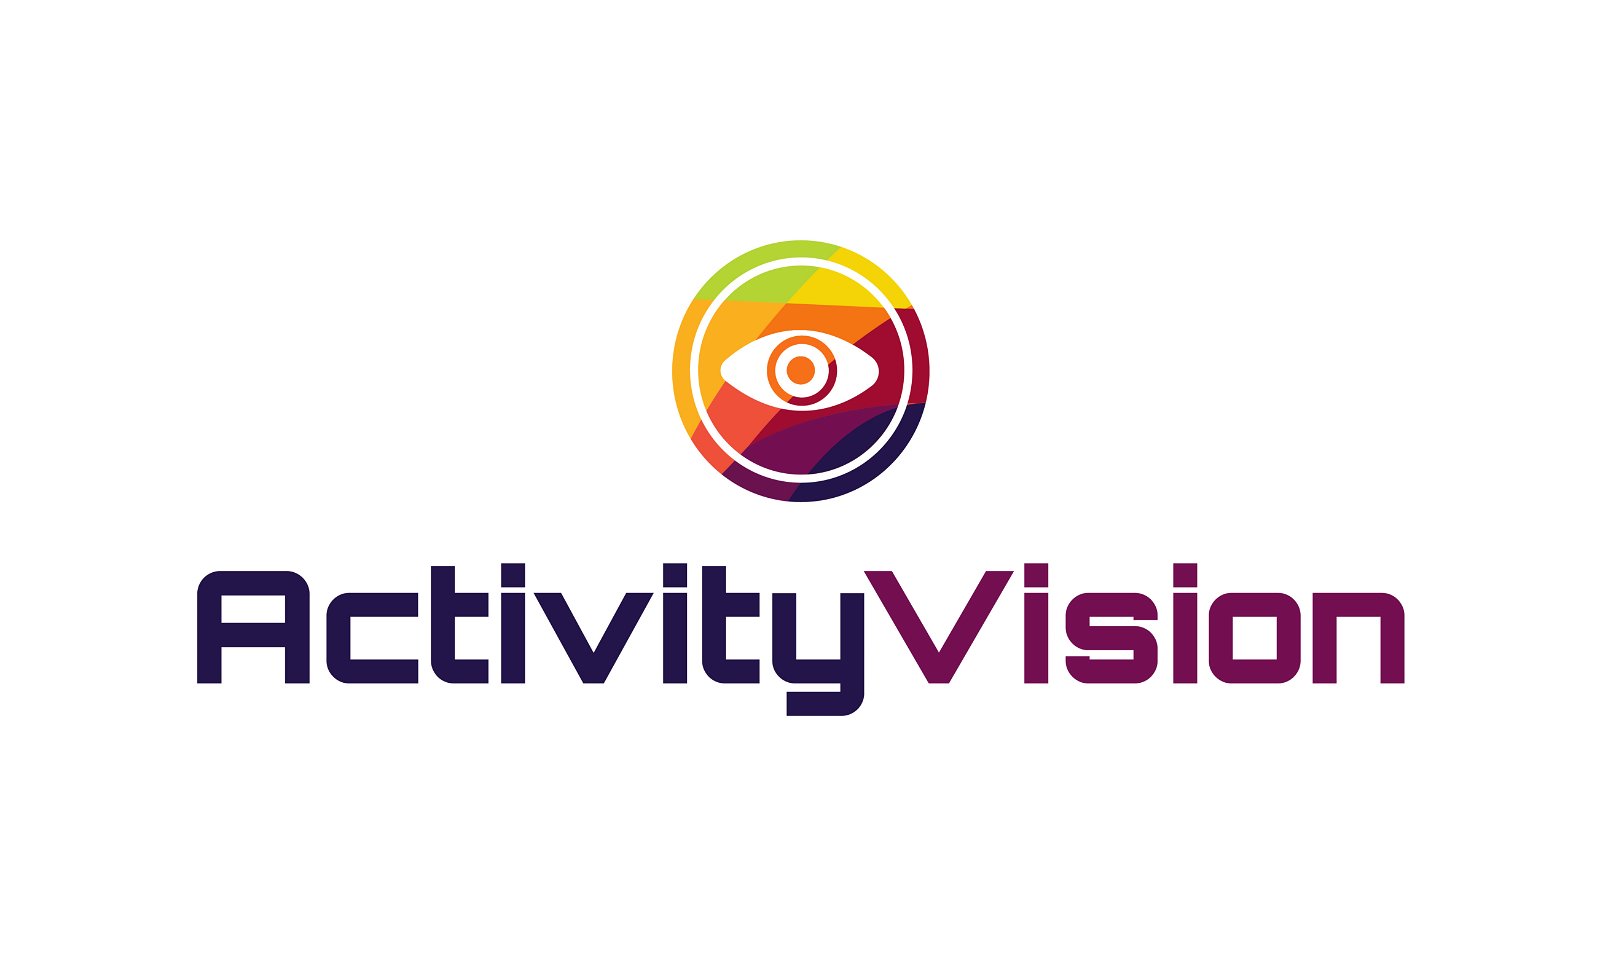 ActivityVision.com - Creative brandable domain for sale